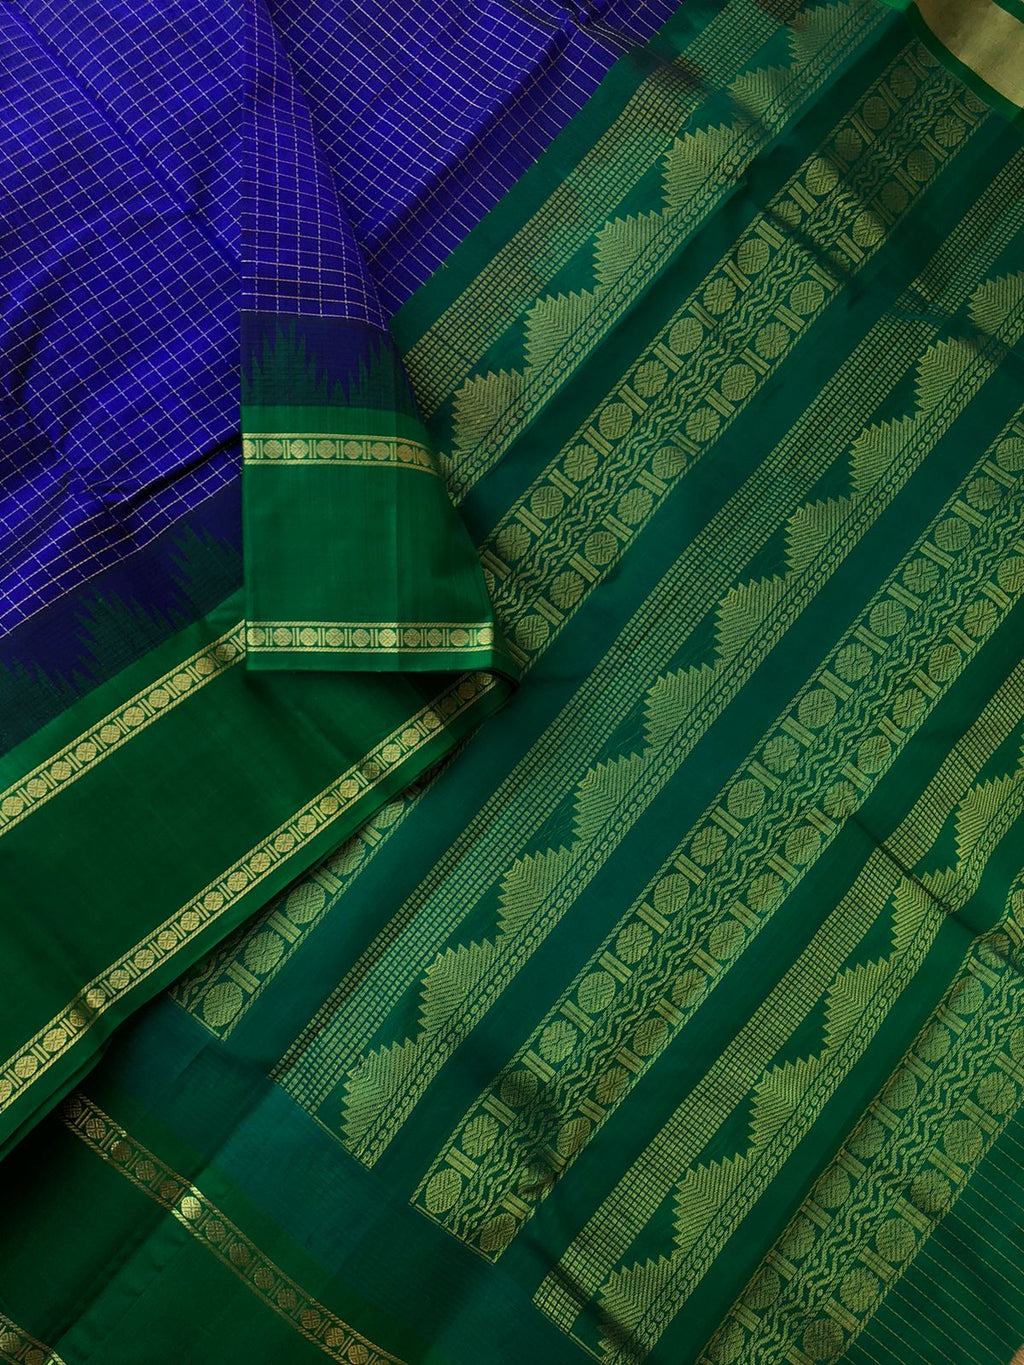 Kattams on Korvai Silk Cotton - deep ink blue and Meenakshi green zari kattam